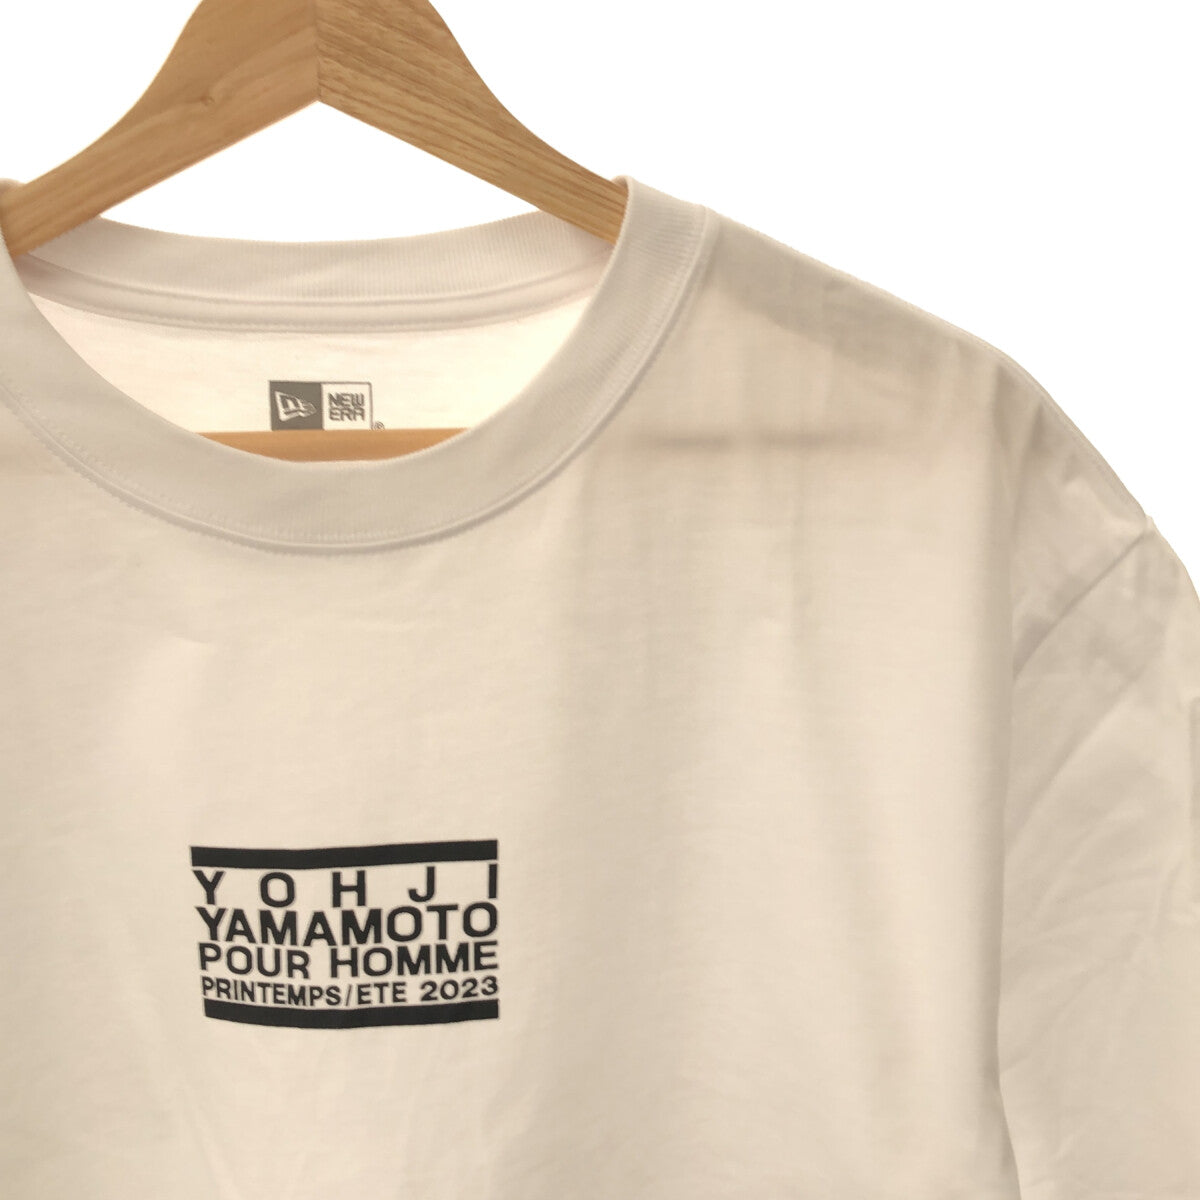 YOHJI YAMAMOTO POUR HOMME / ヨウジヤマモトプールオム | x NEW ERA AW99 ERASER LOGO WHITE TEE / ニューエラ コラボ ロゴ Tシャツ | 5 |